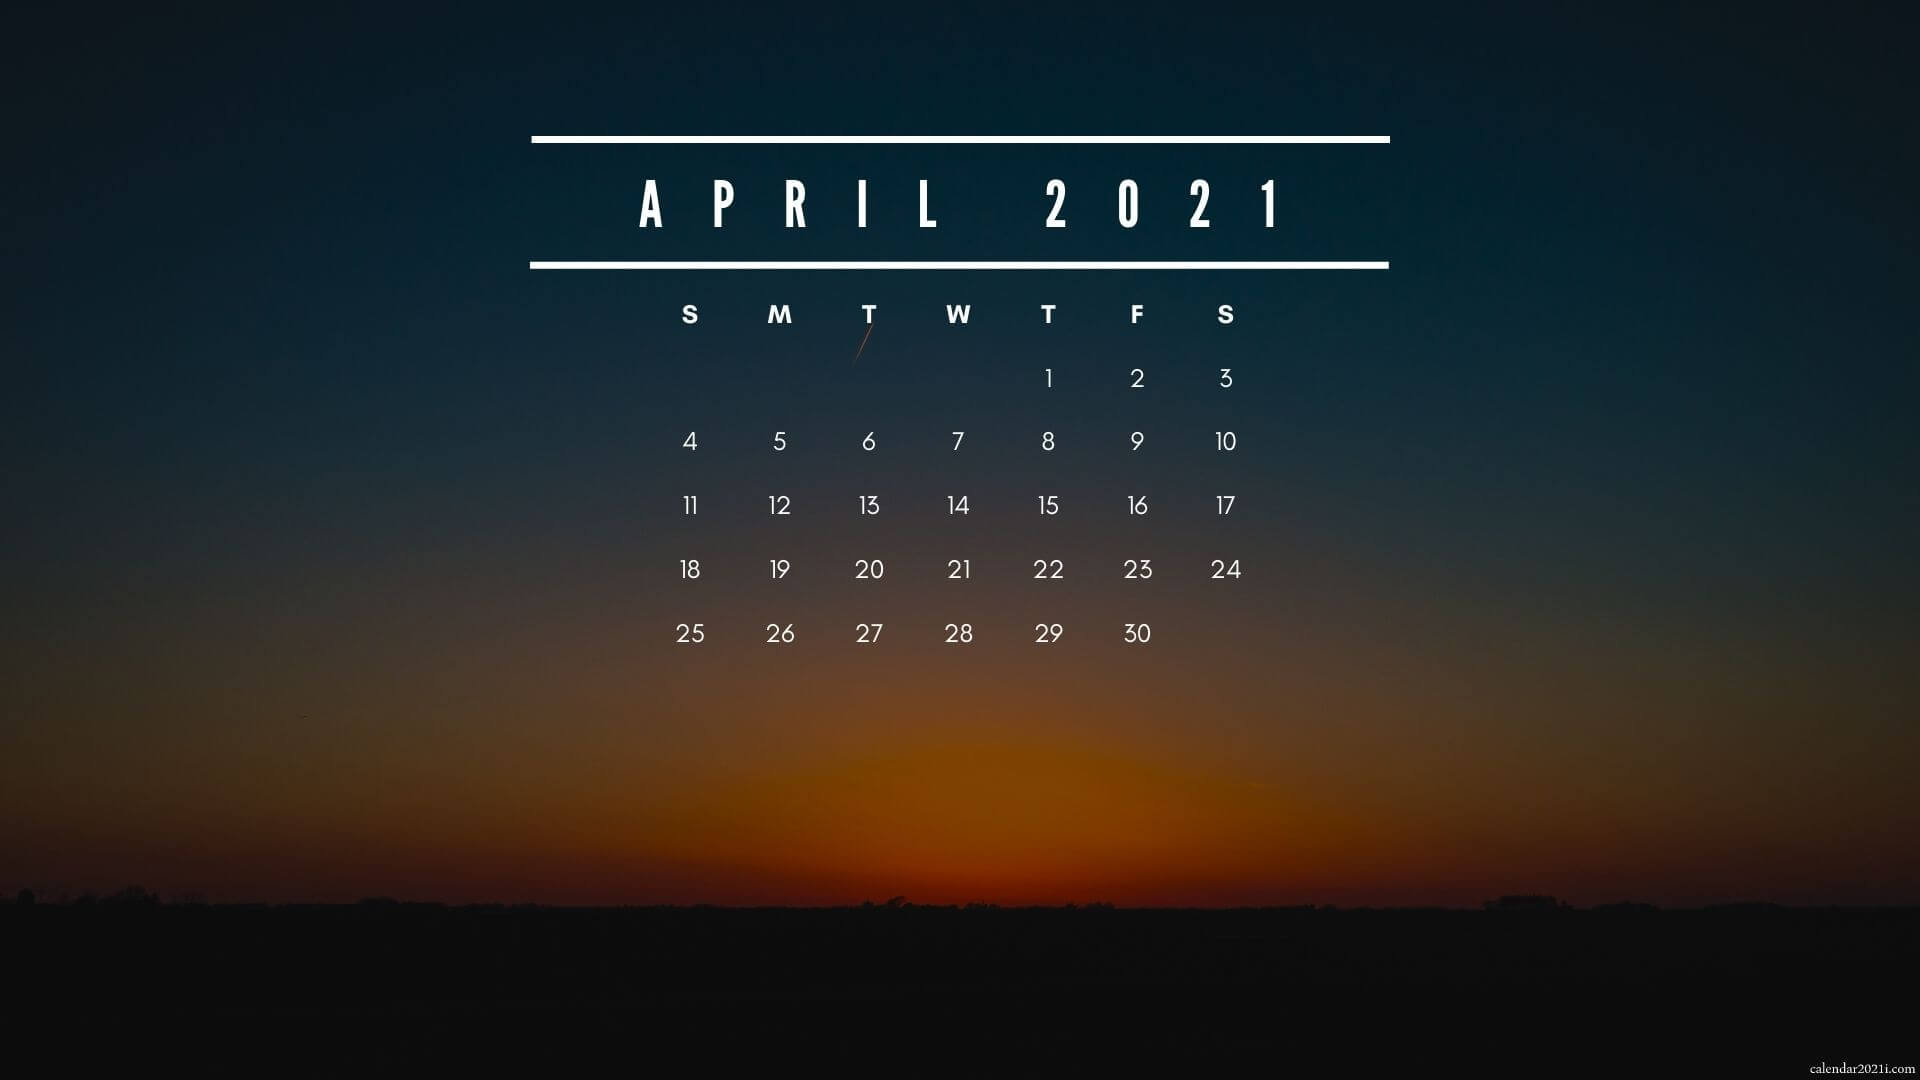 April 2021 Desktop Calendar Wallpaper